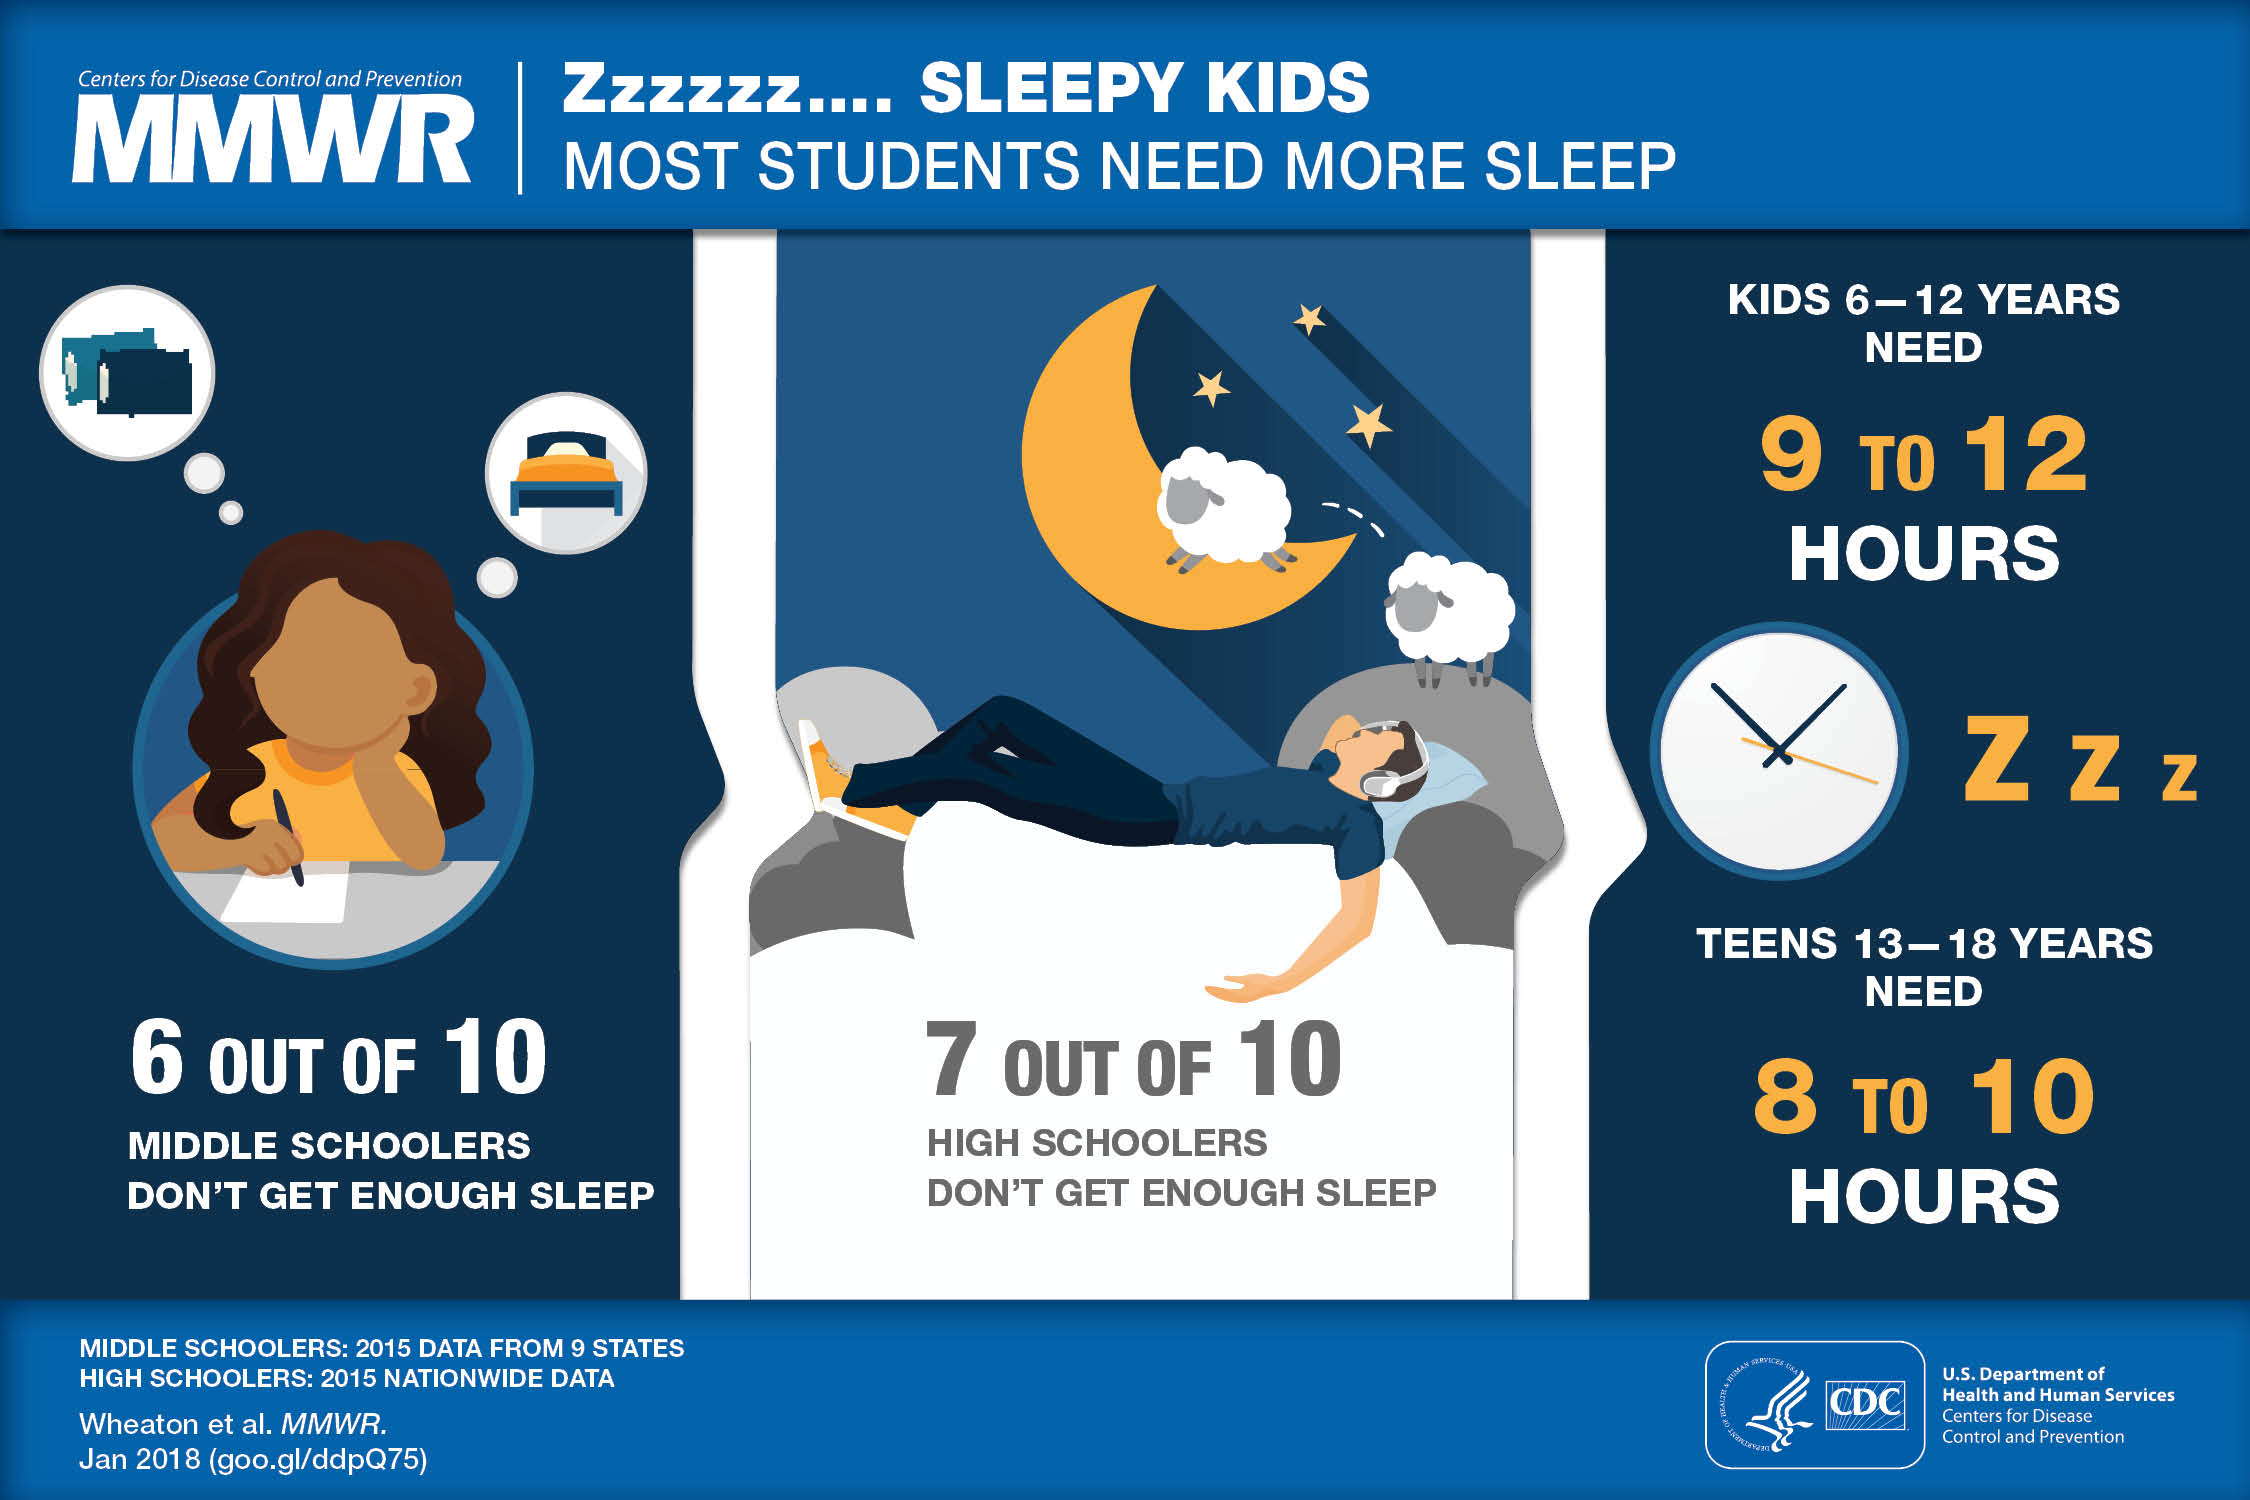 Zzzzzz…. SLEEPY KIDS – Most students need more sleep.